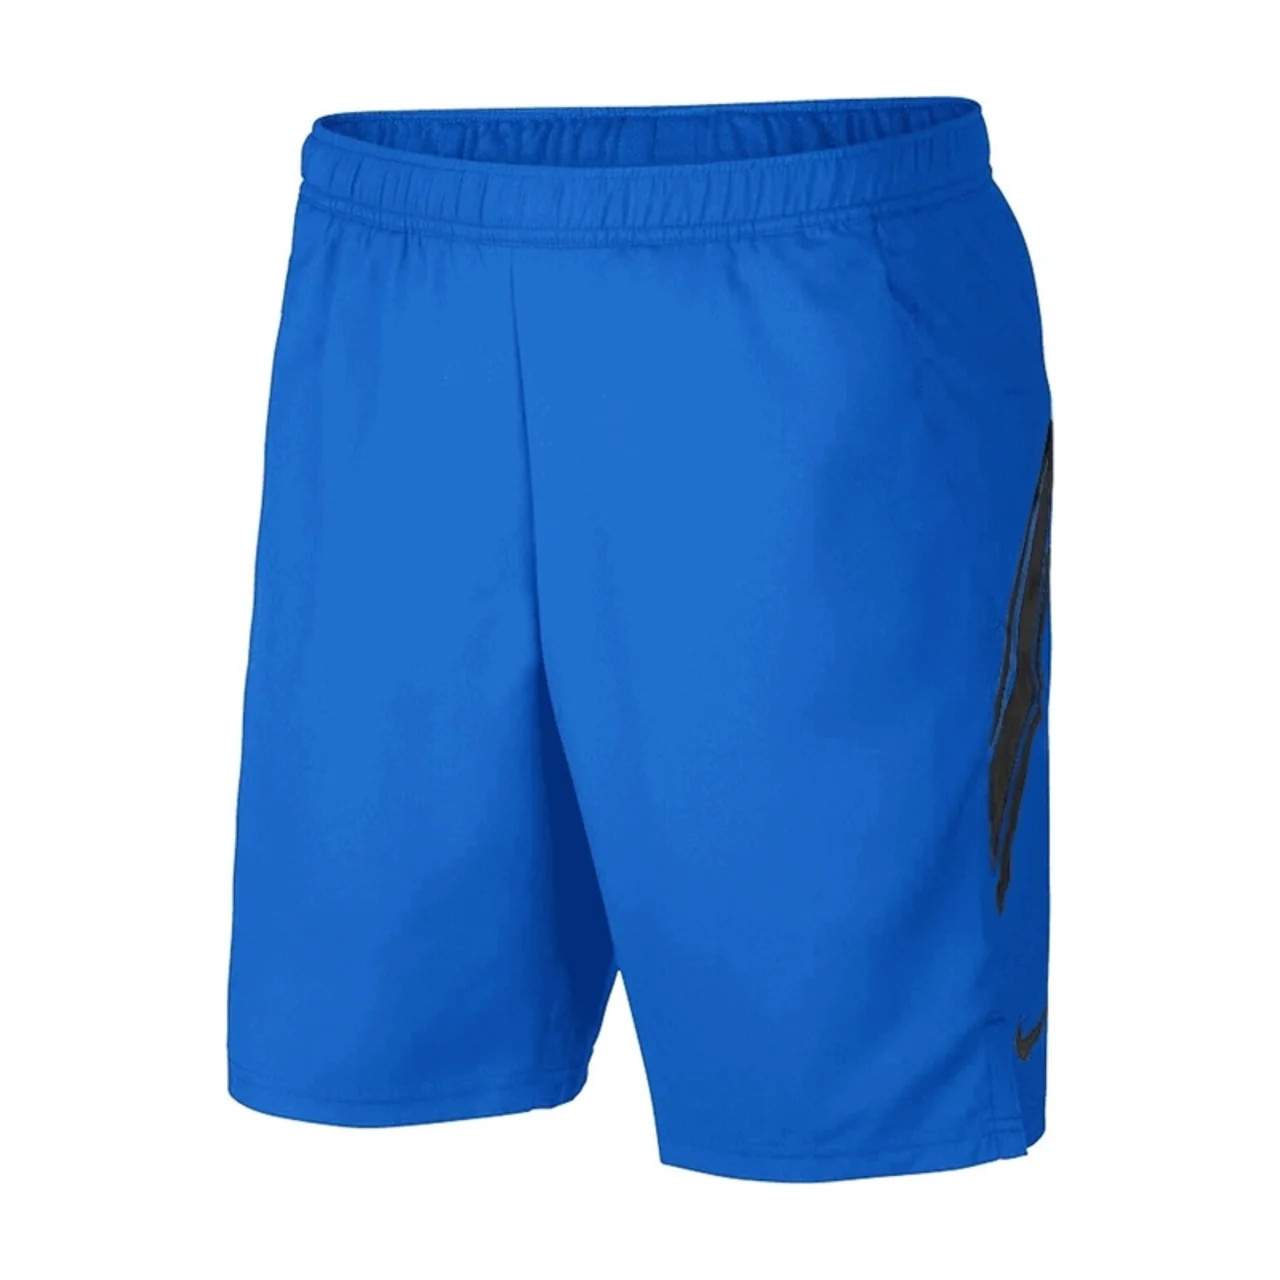 Nike Dry 9 Shorts Blue/Black Size XL